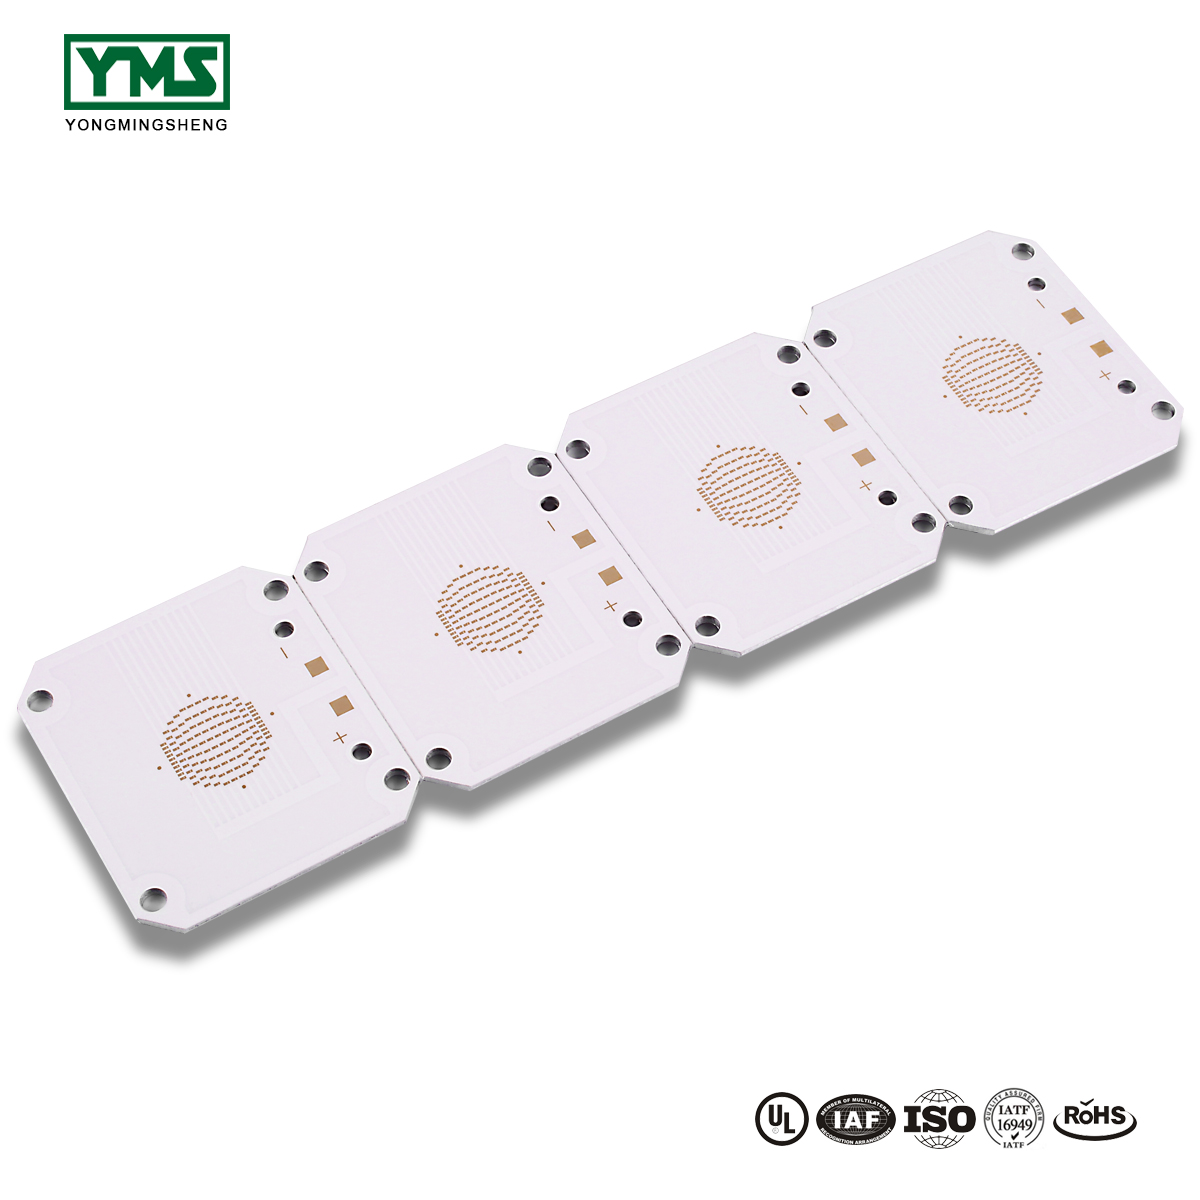 Free sample for High Density Interconnect Pcb(Hdi Pcb) - 1Layer Aluminum base Board | YMSPCB – Yongmingsheng